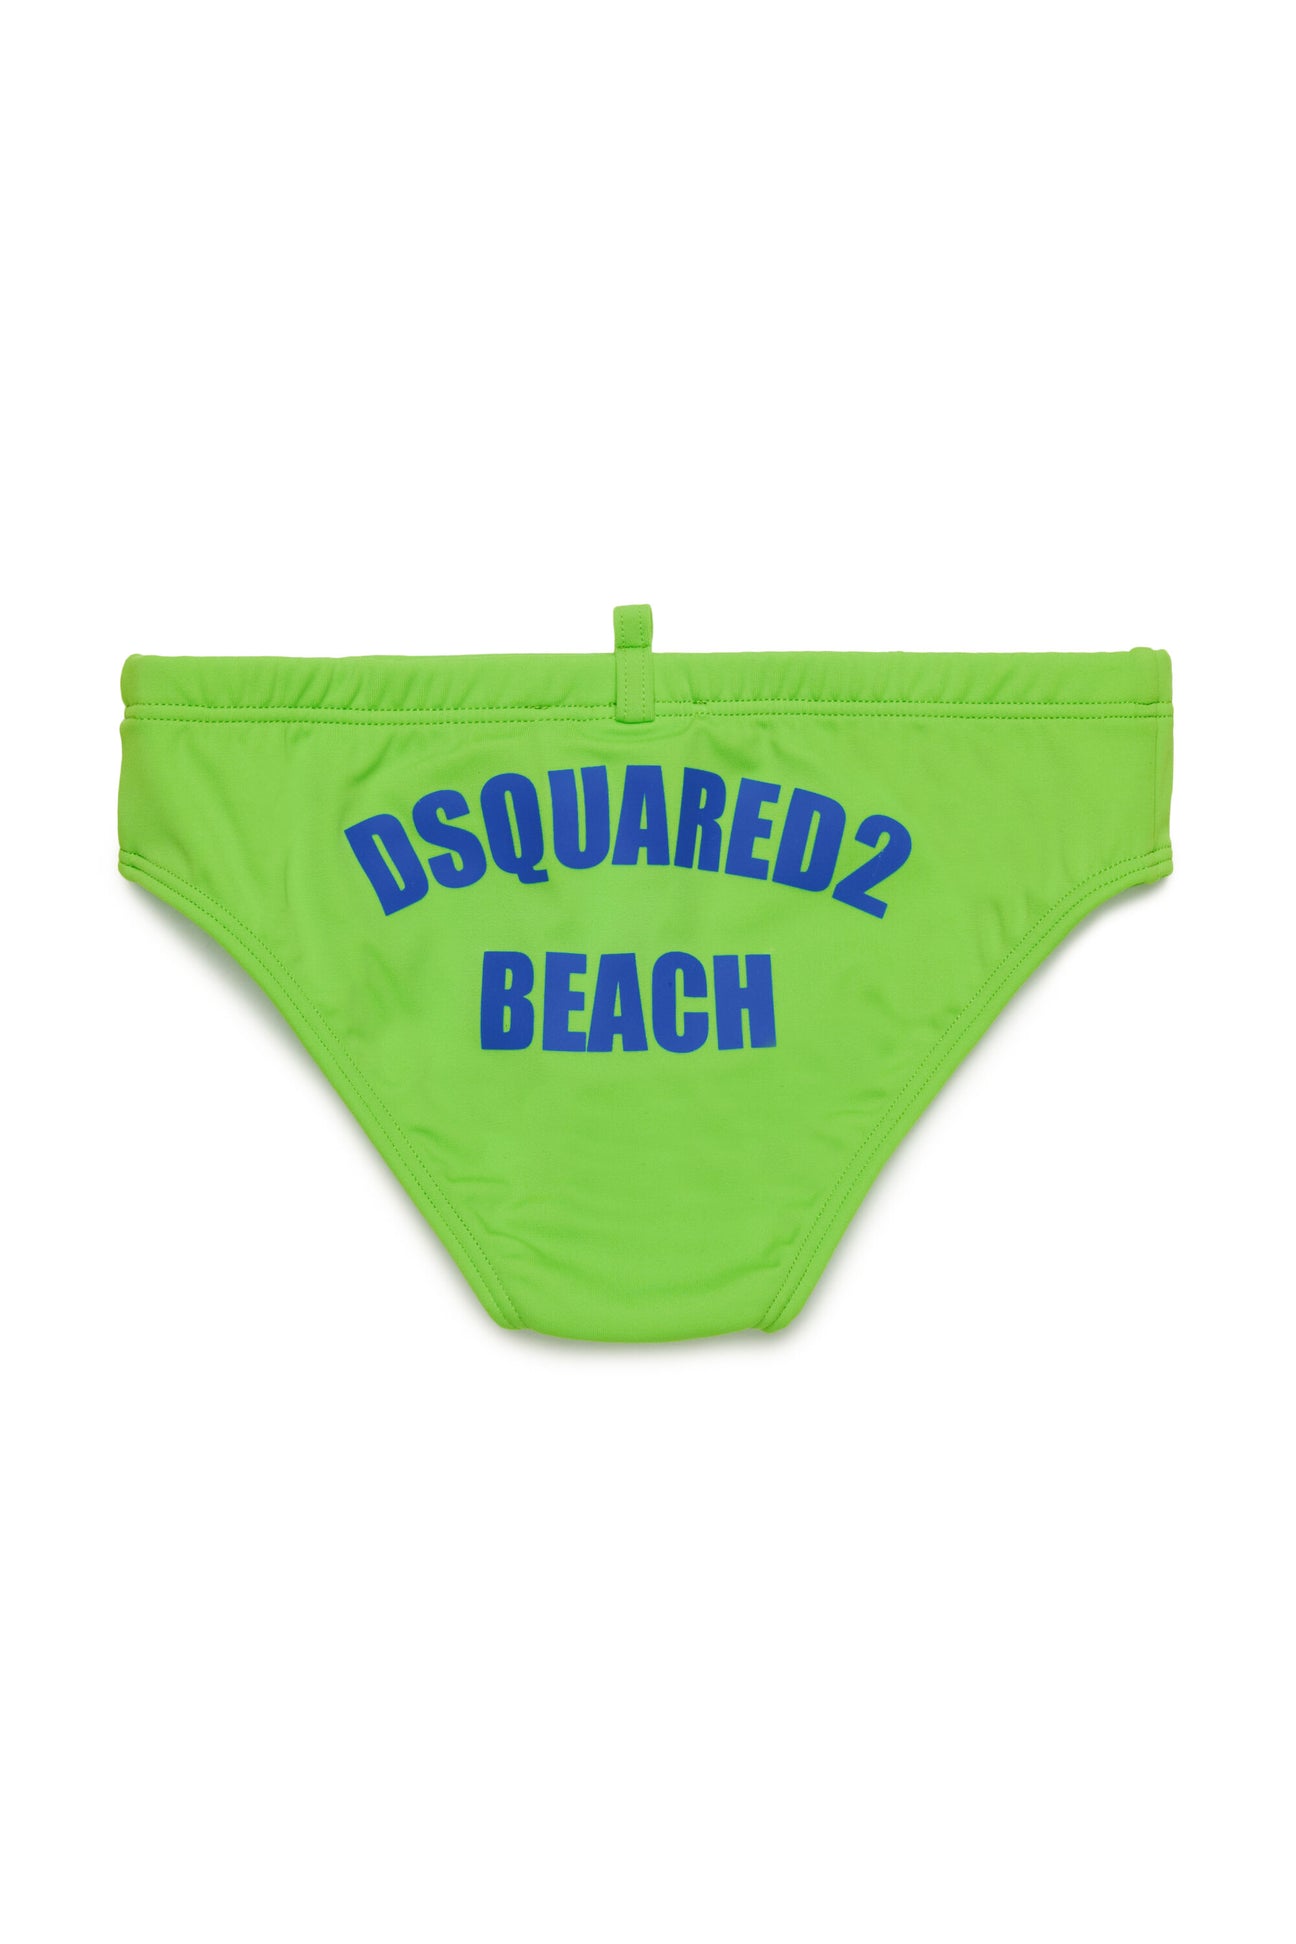 Beach graphic briefs swimsuit Beach graphic briefs swimsuit